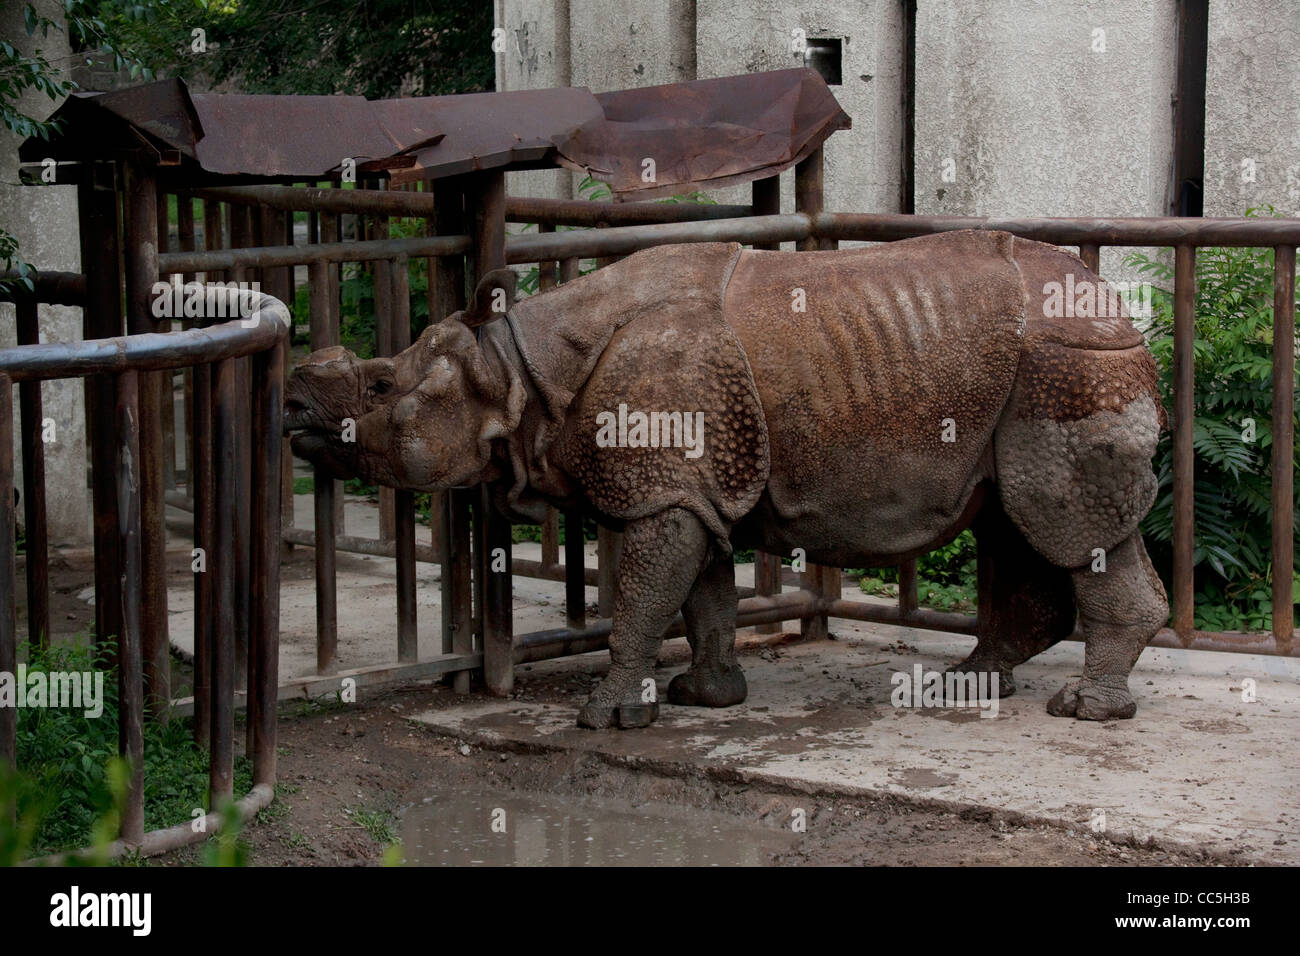 Indian Rhinoceros, Beijing Zoo, China Stock Photo